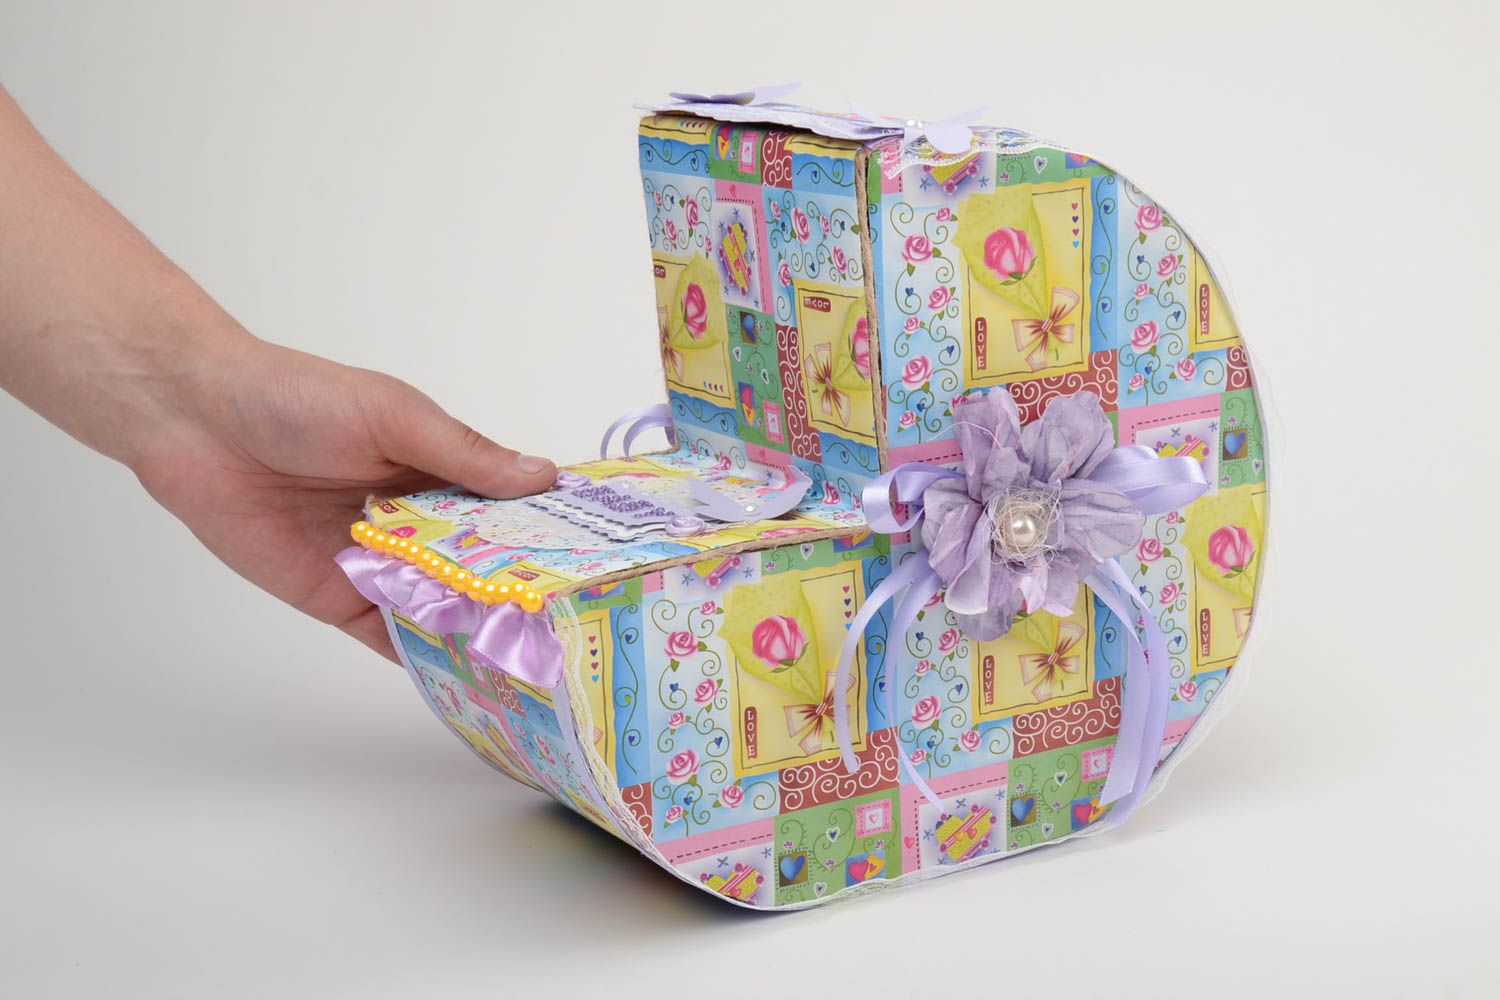 Baby Gift Basket Ideas | Diaper Cake DIY | New Wreath Winner! 🍋🌸 - YouTube